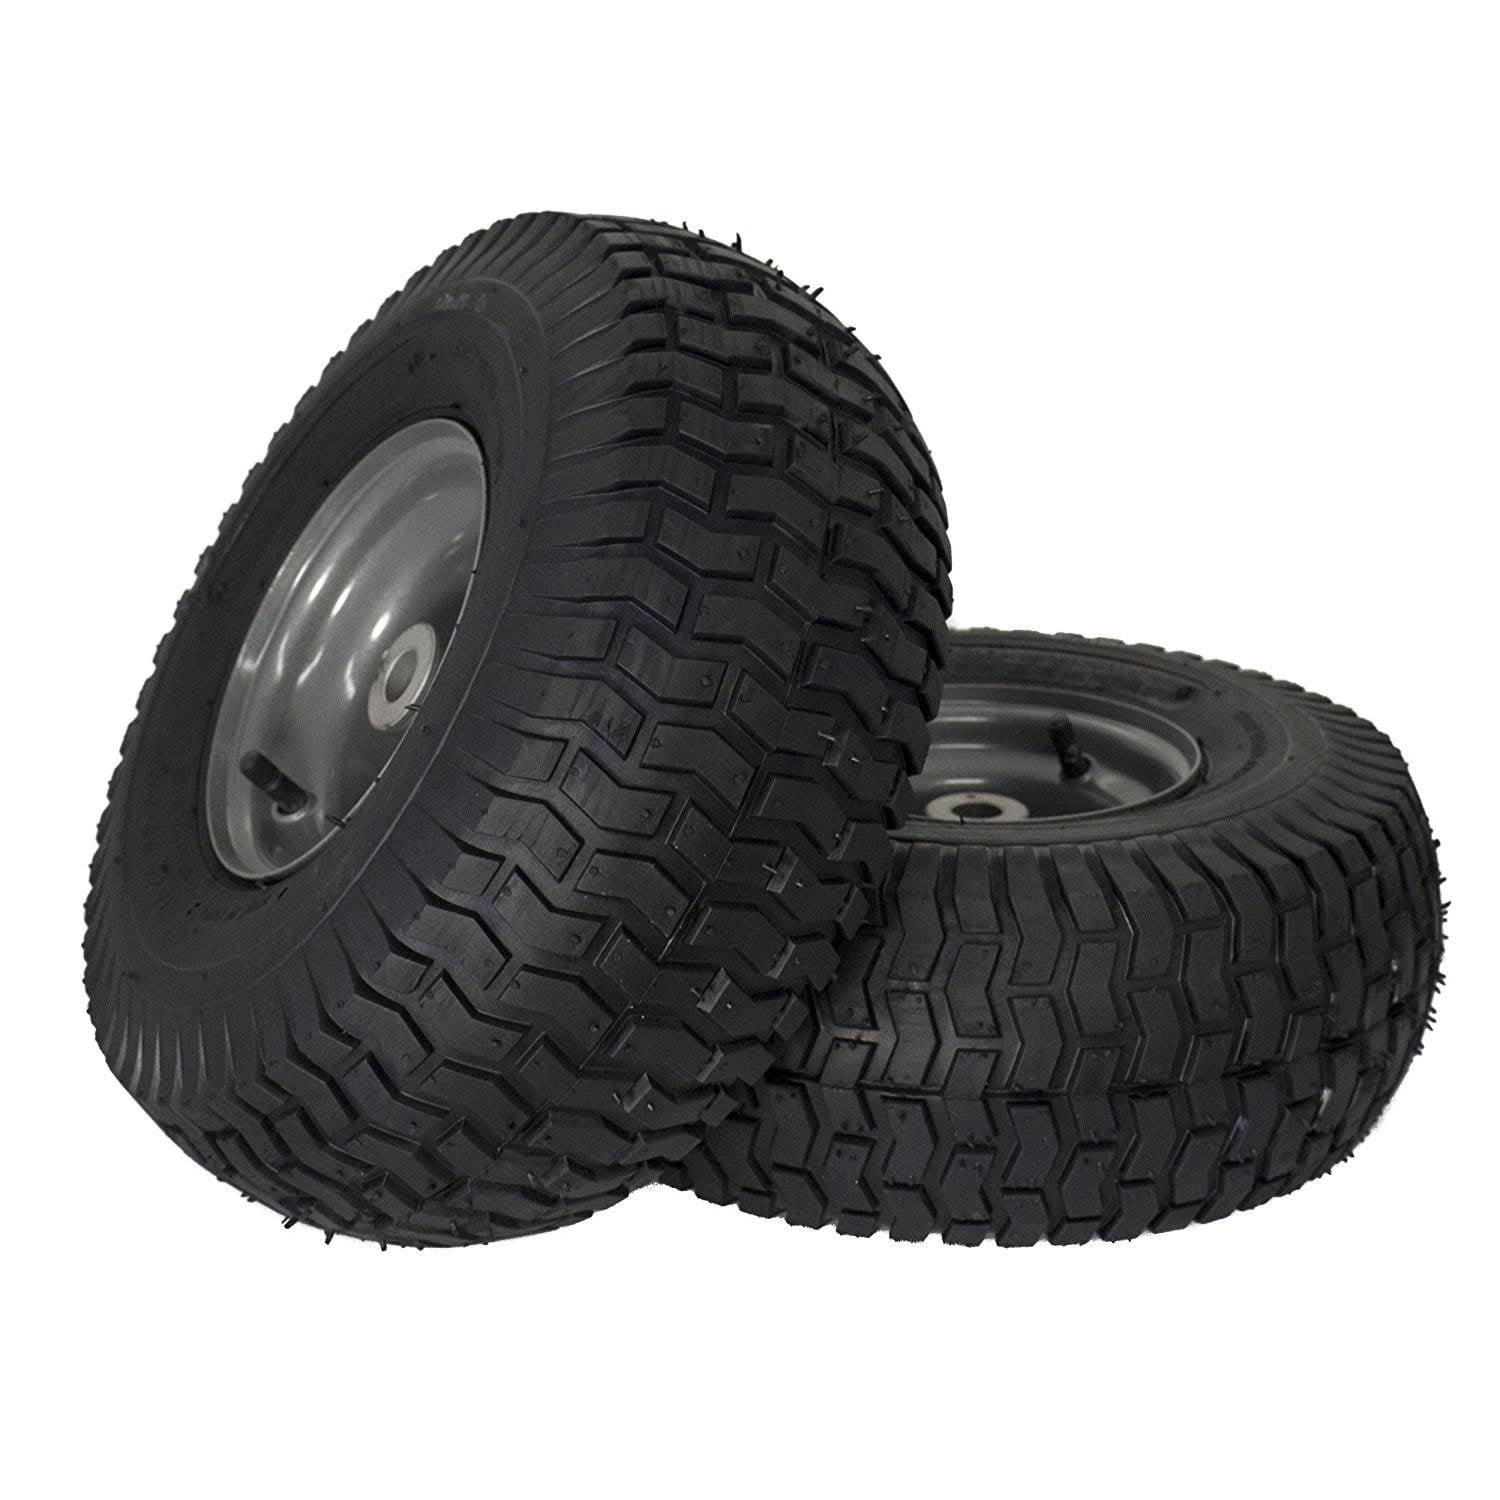 X lawn mower tires